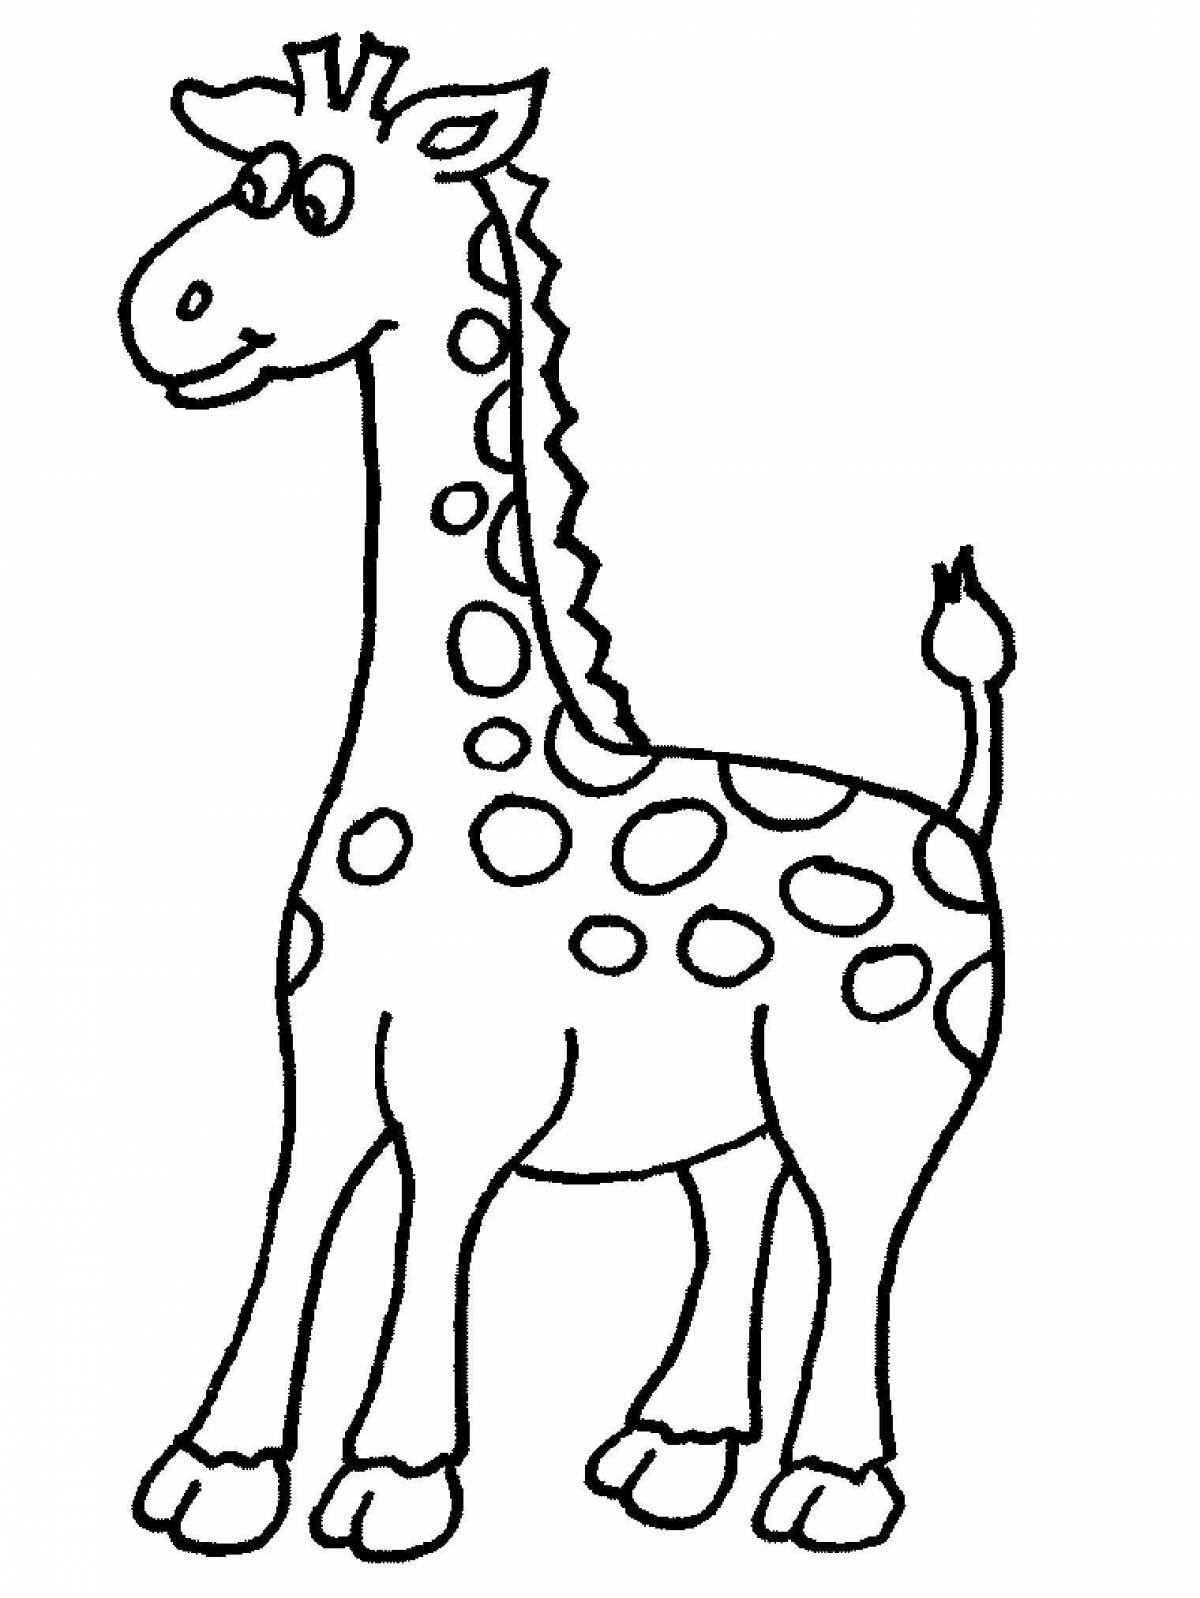 Забавная раскраска жирафа для детей